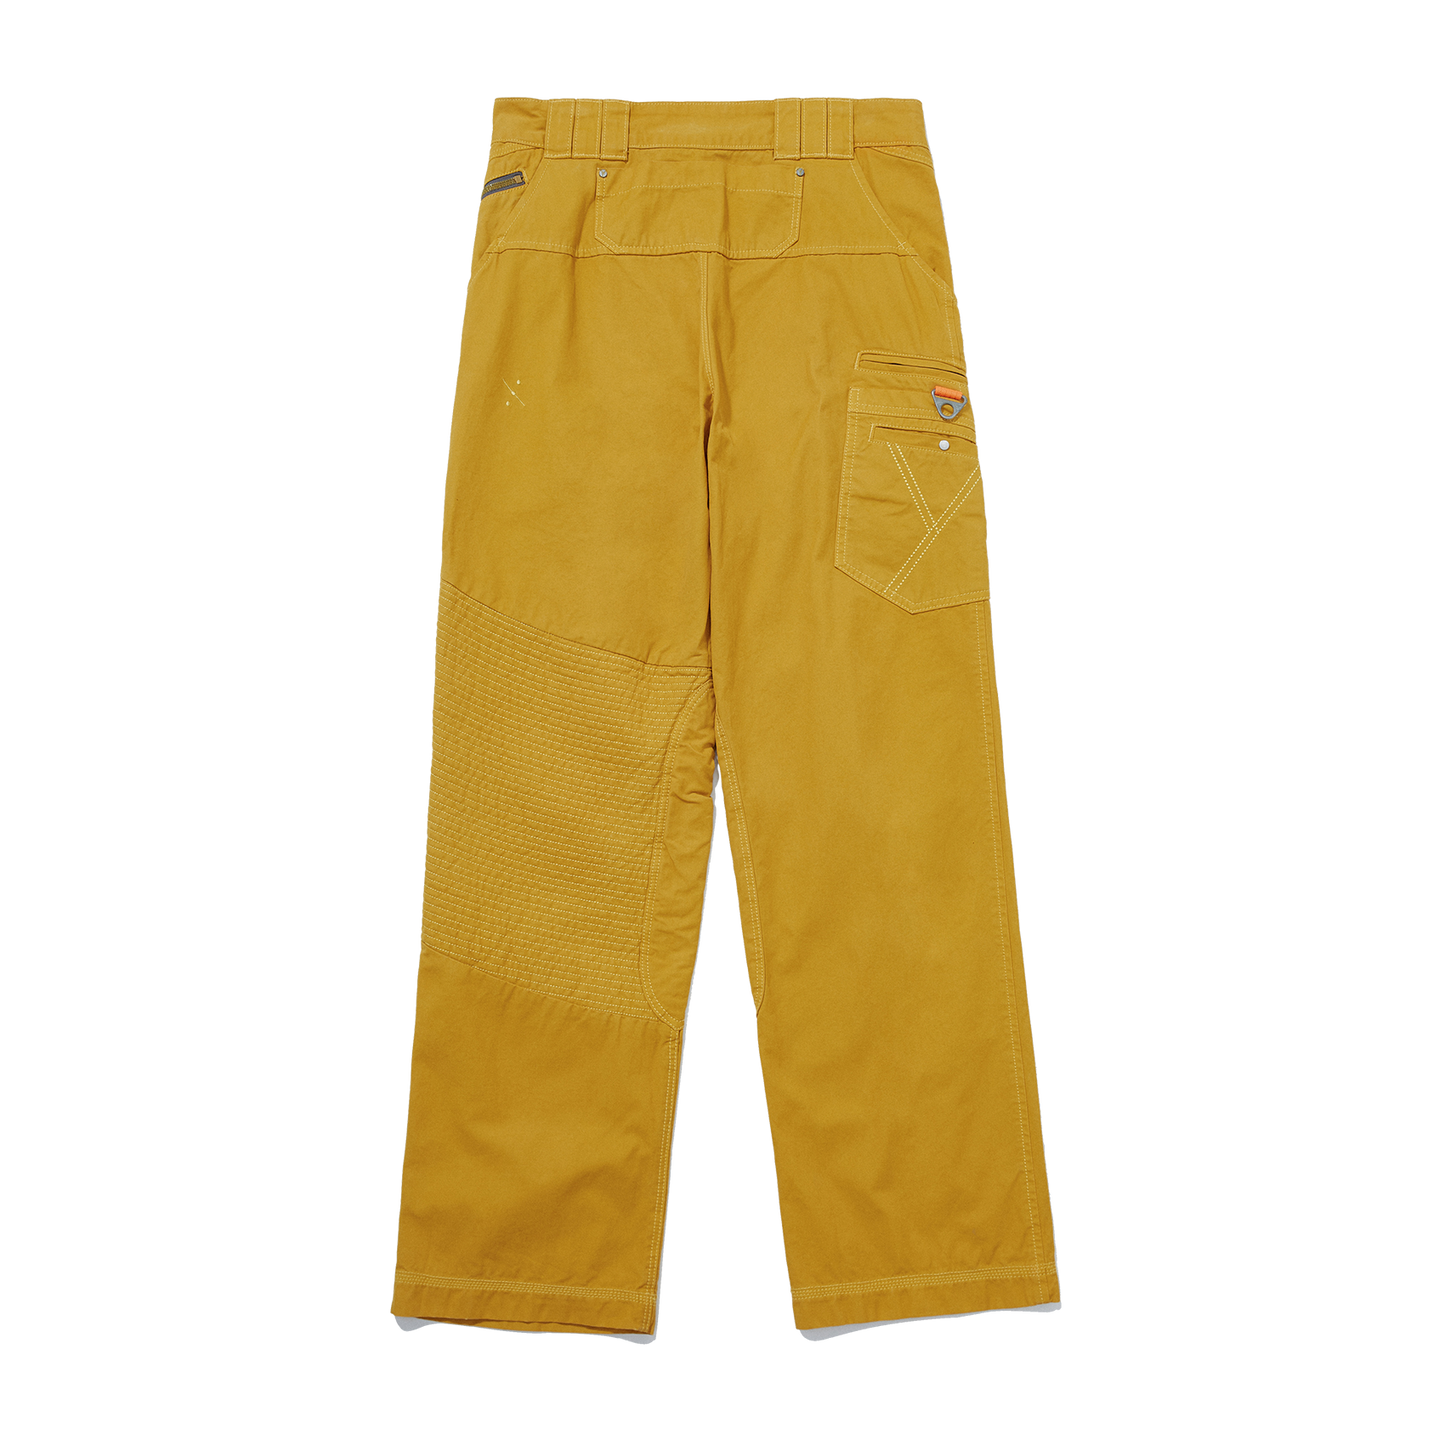 KILLWHY·Builder Pants 2 “建筑工作裤”